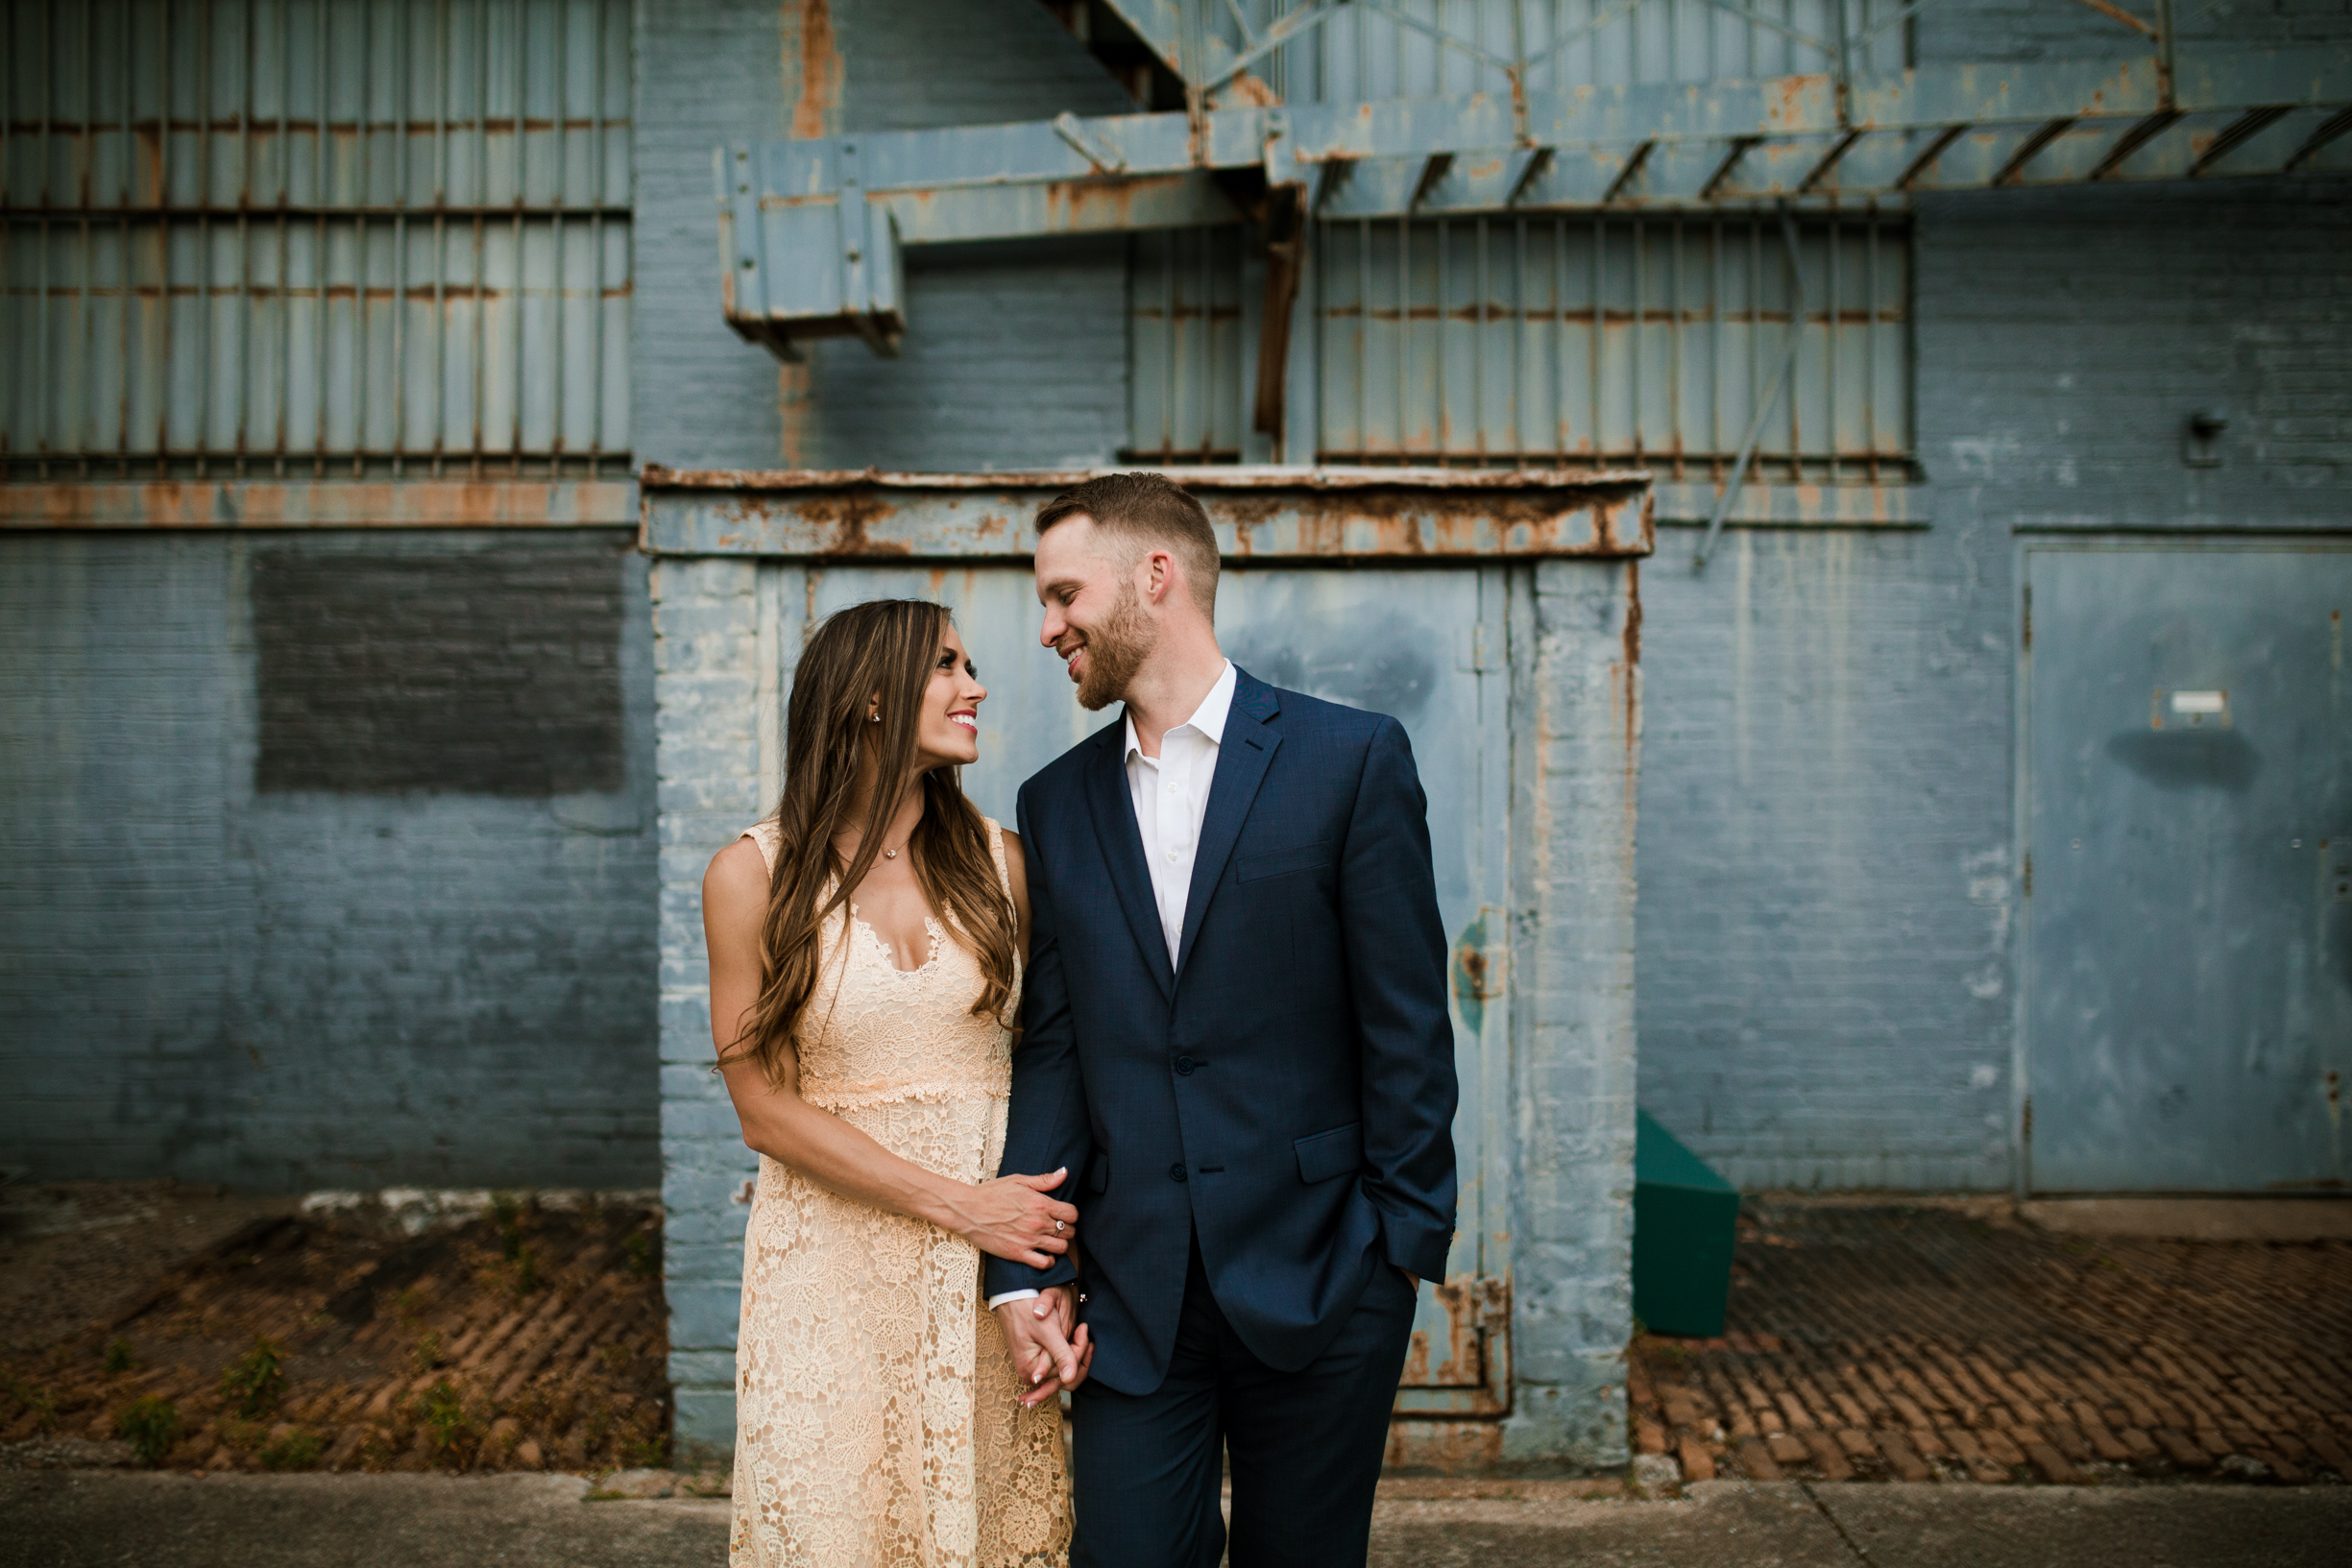 Victoria & Chad Engagement 2018 Crystal Ludwick Photo Louisville Kentucky Wedding Photographer WEBSITE (10 of 48).jpg